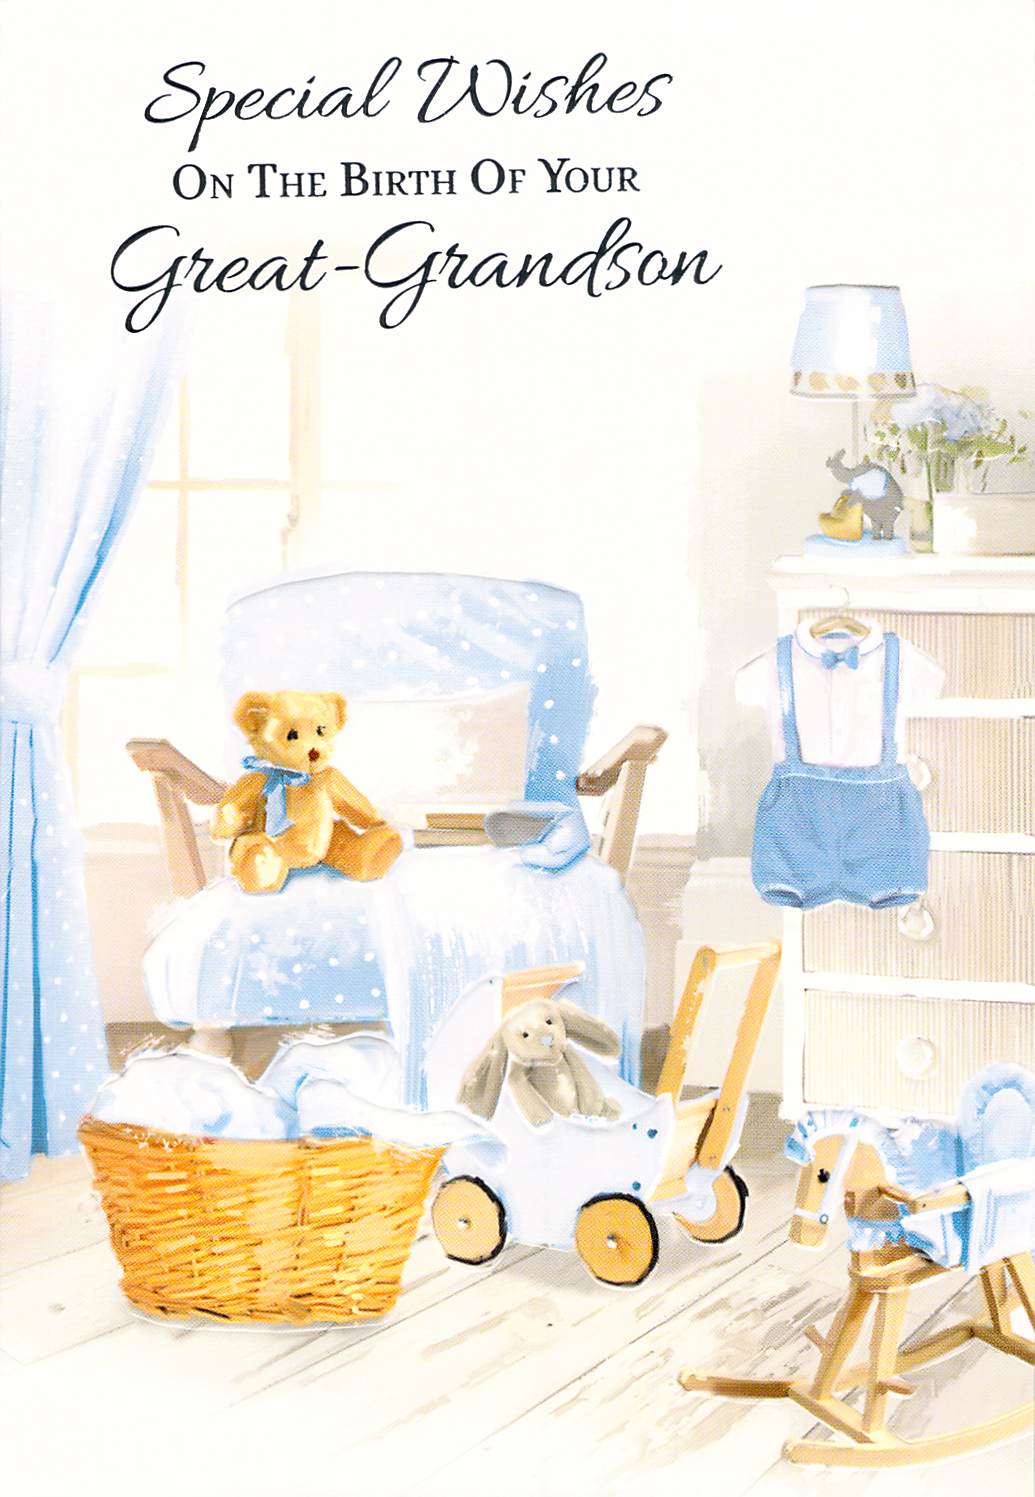 Birth (Great-Grandson) - Greeting Card - Multi Buy - Free P&P